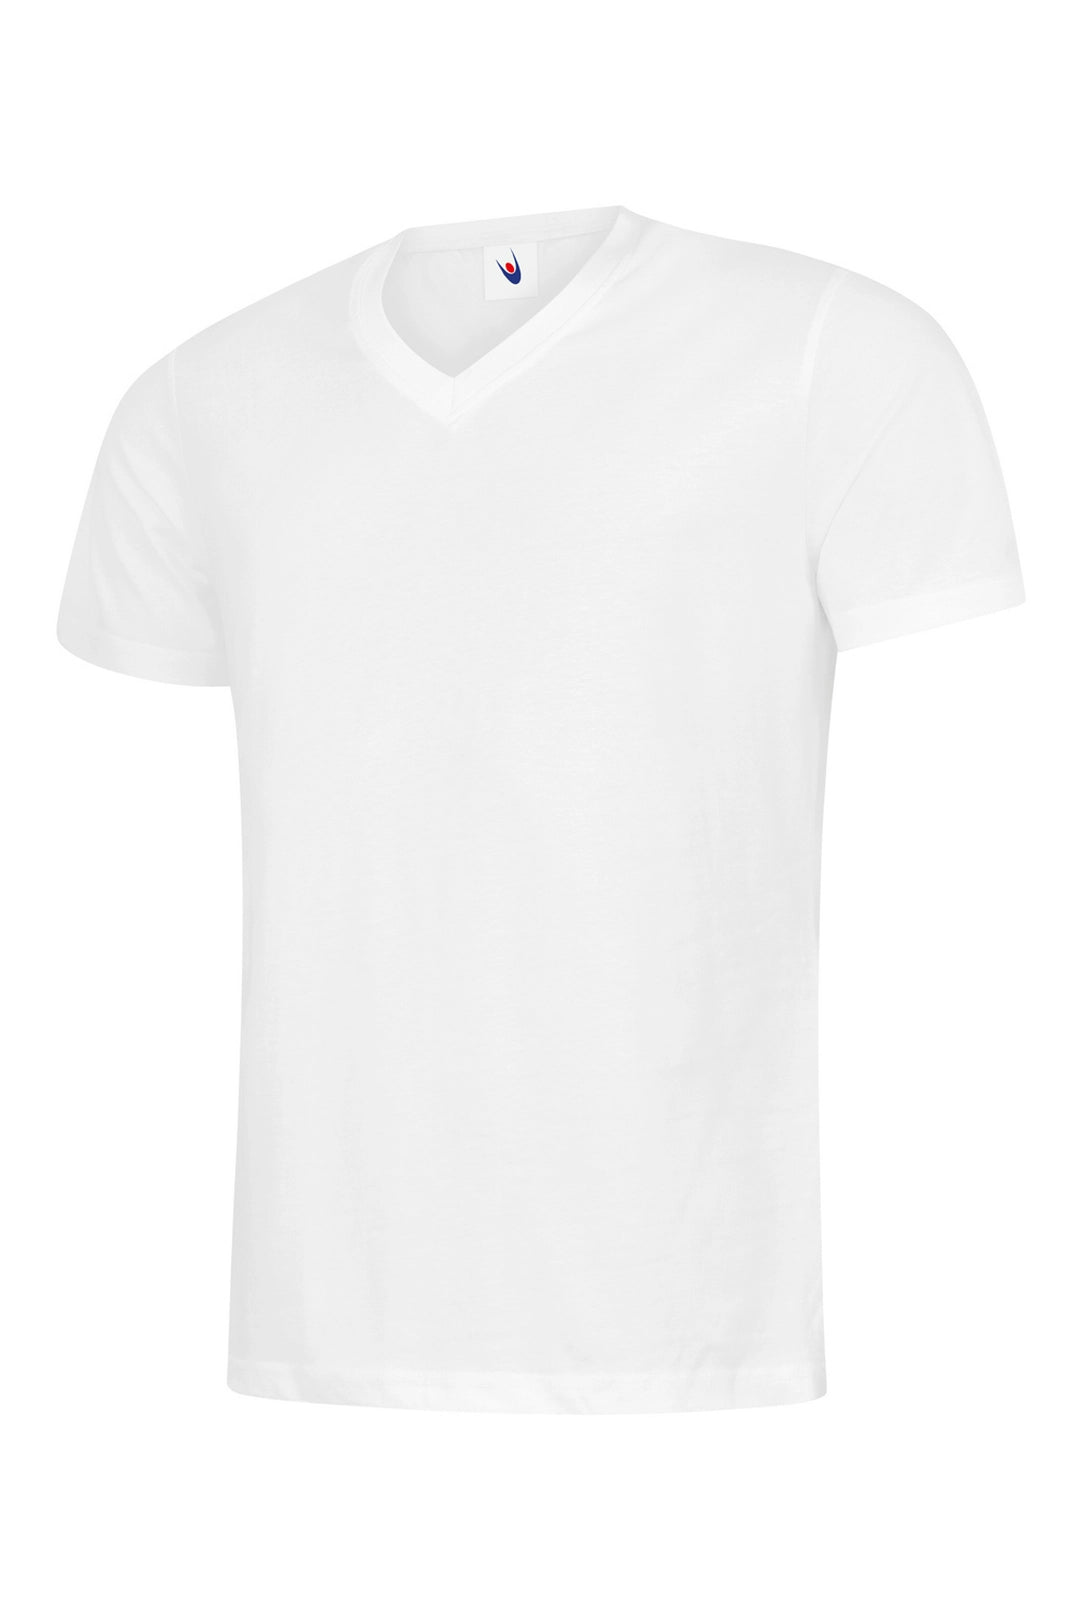 Uneek Clothing UC317 Classic V-Neck T-shirt - COOZO